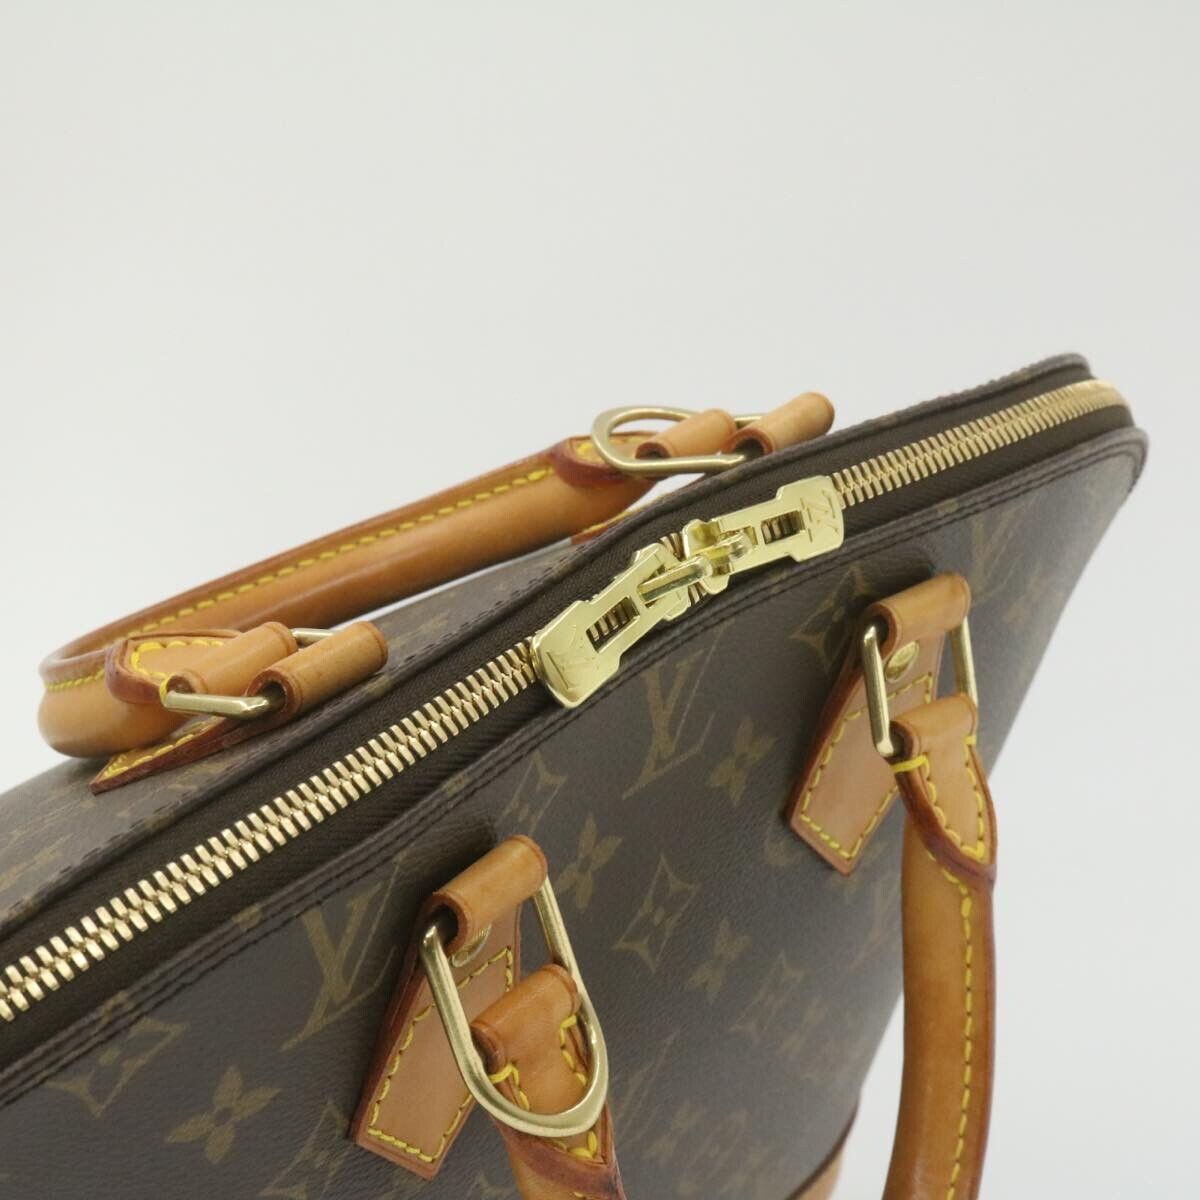 Louis Vuitton Brown Monogram Canvas Alma MM Top Handle Bag